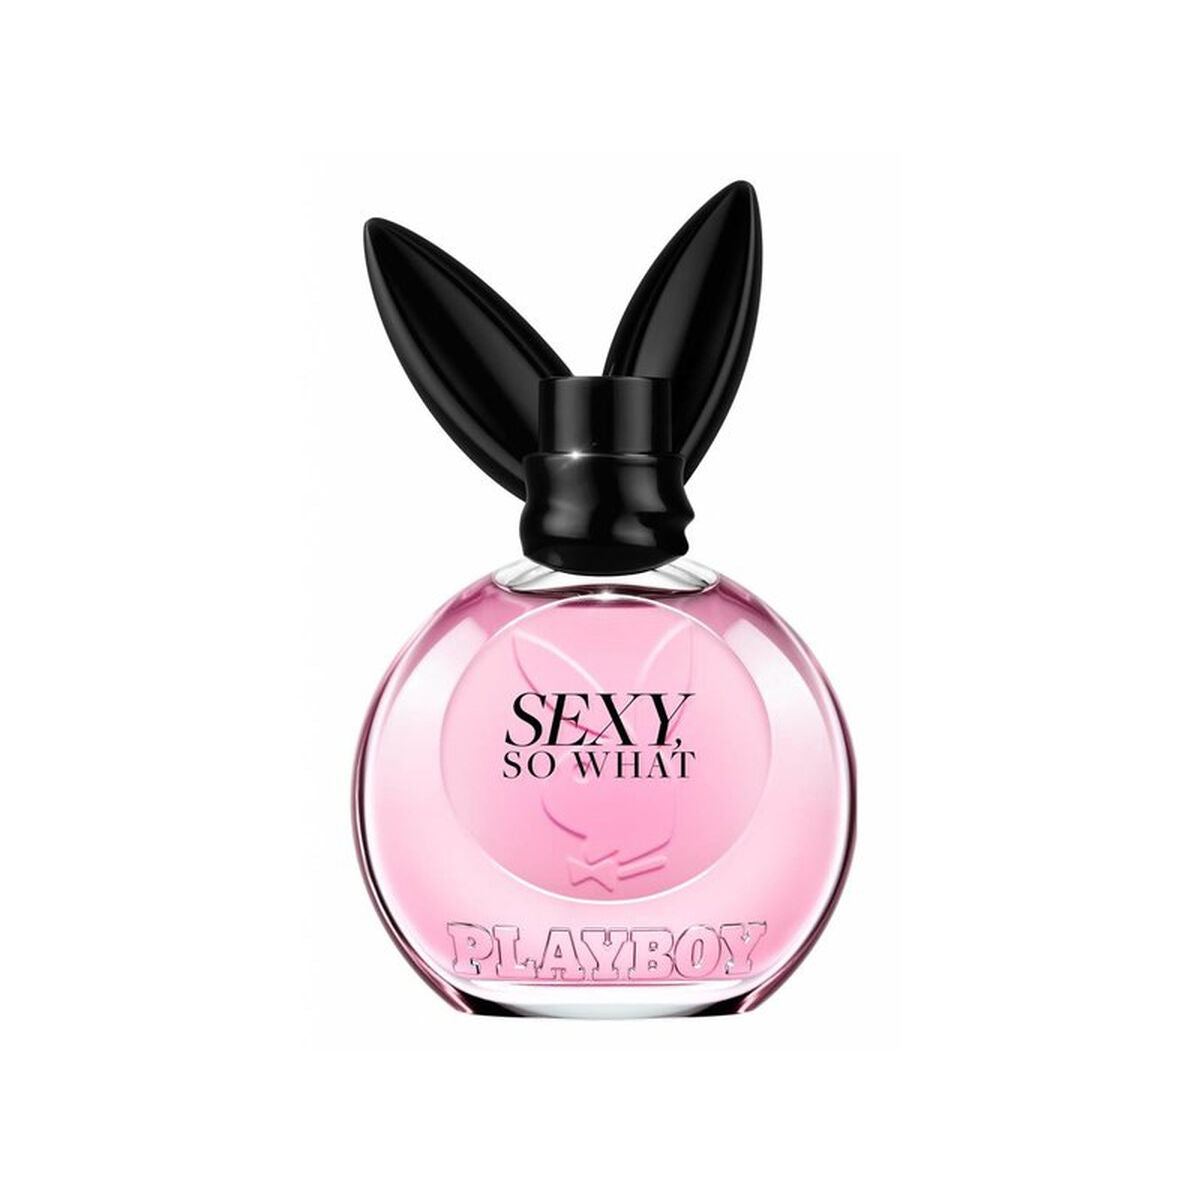 Women's Perfume Playboy EDT 60 ml Sexy, So What